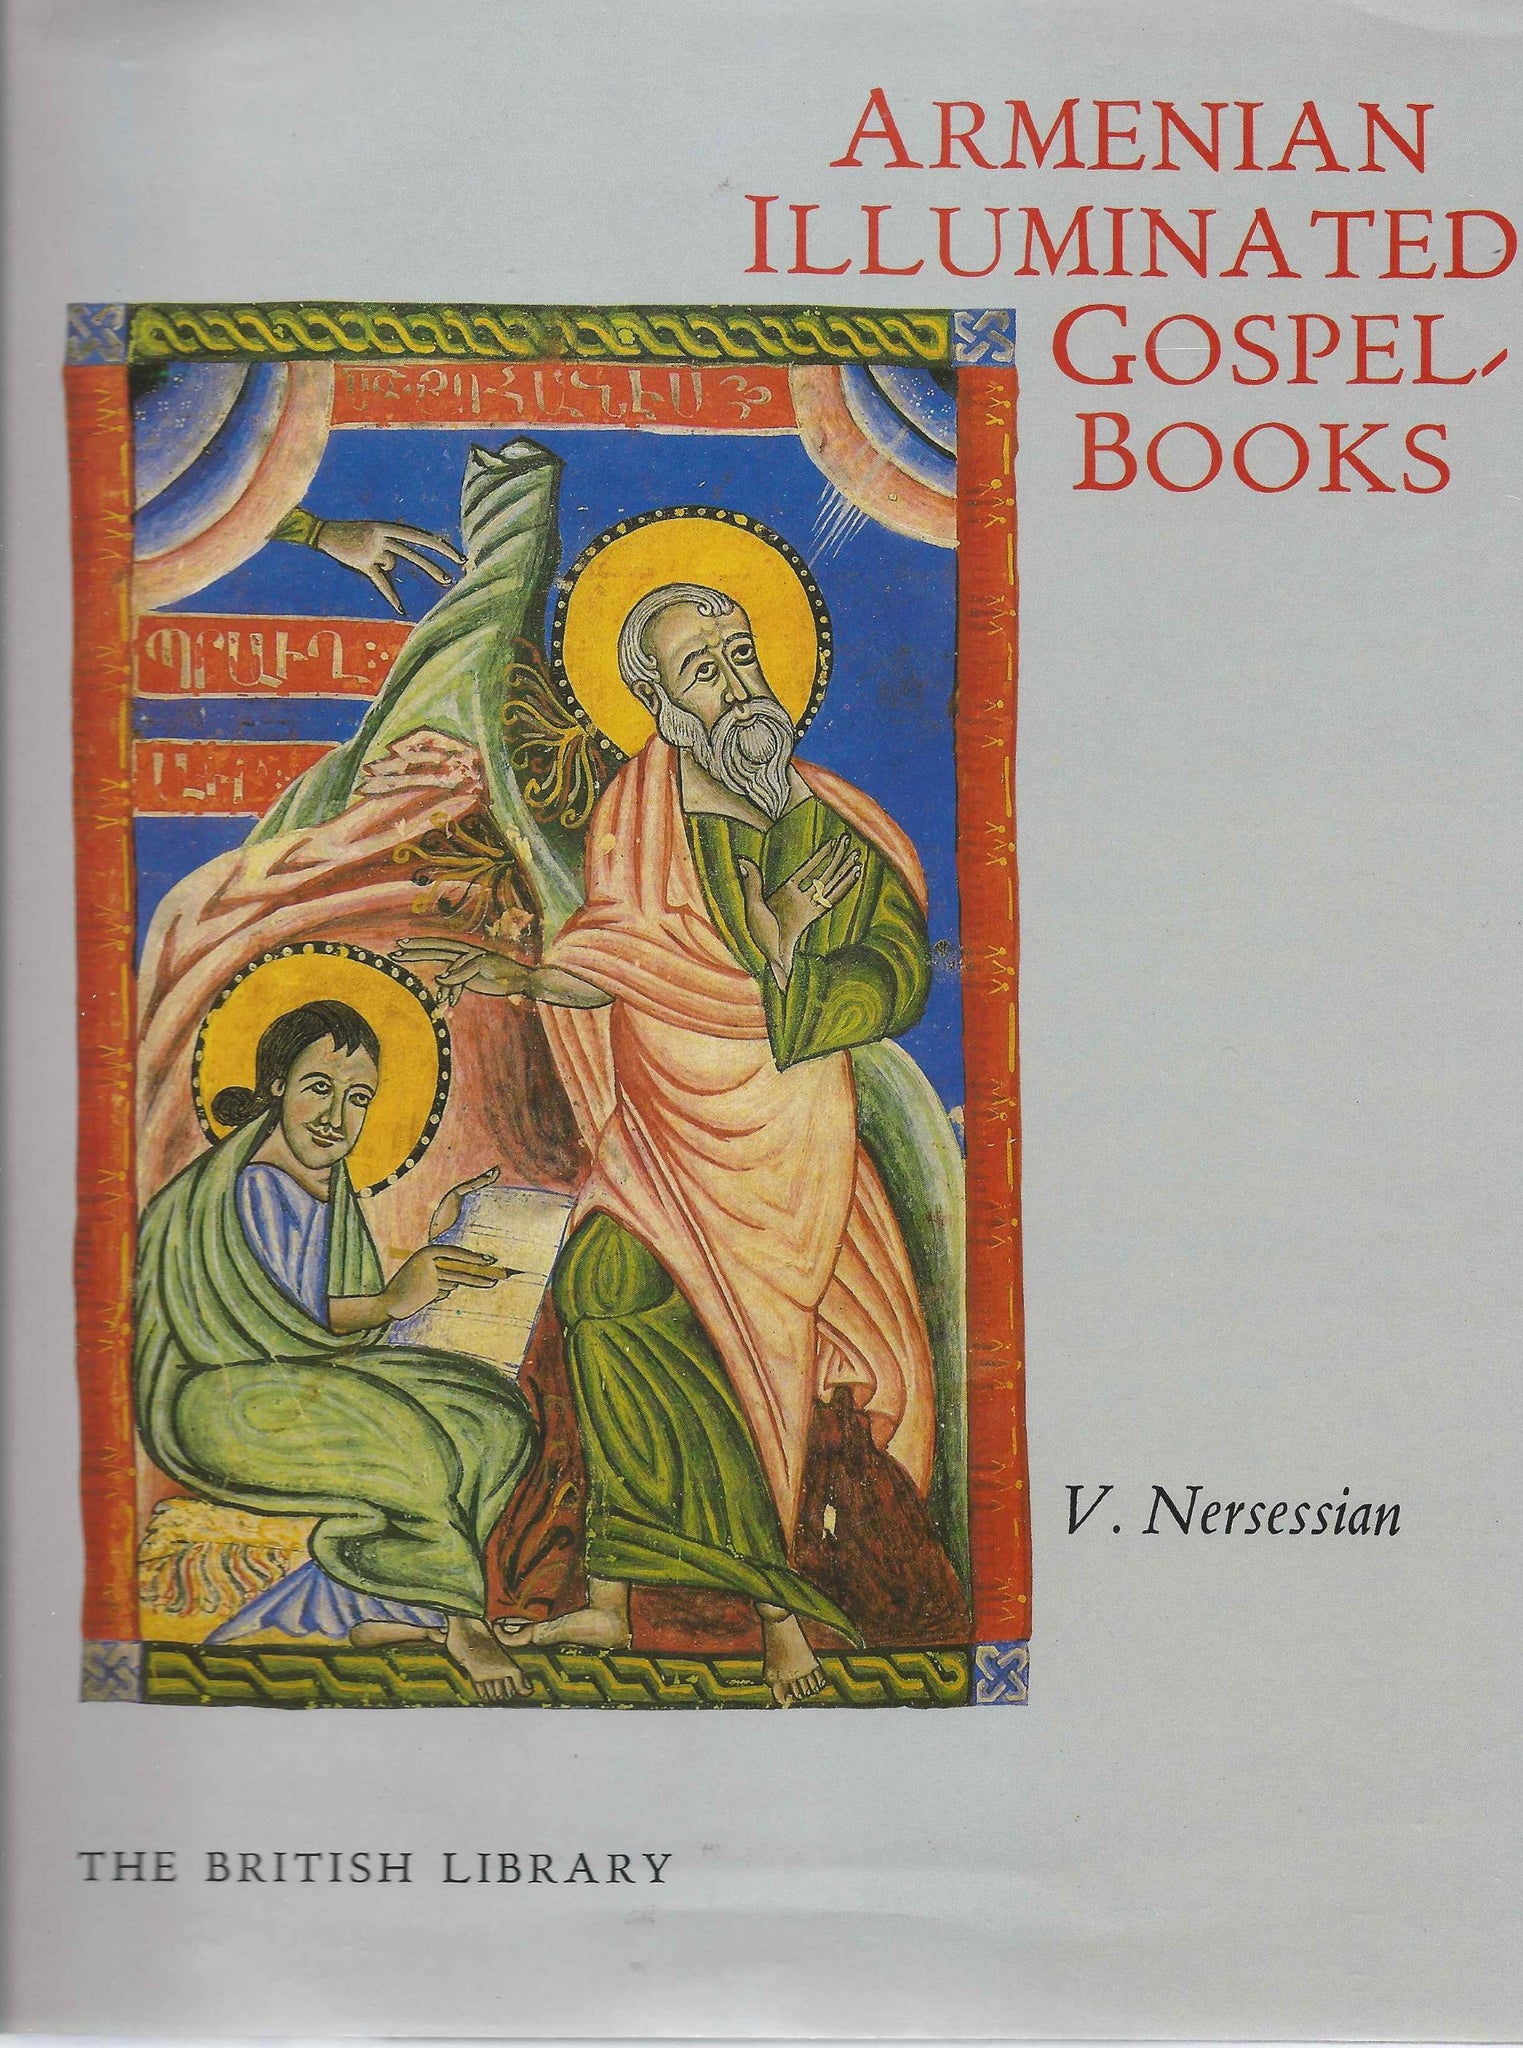 ARMENIAN ILLUMINATED GOSPEL BOOKS